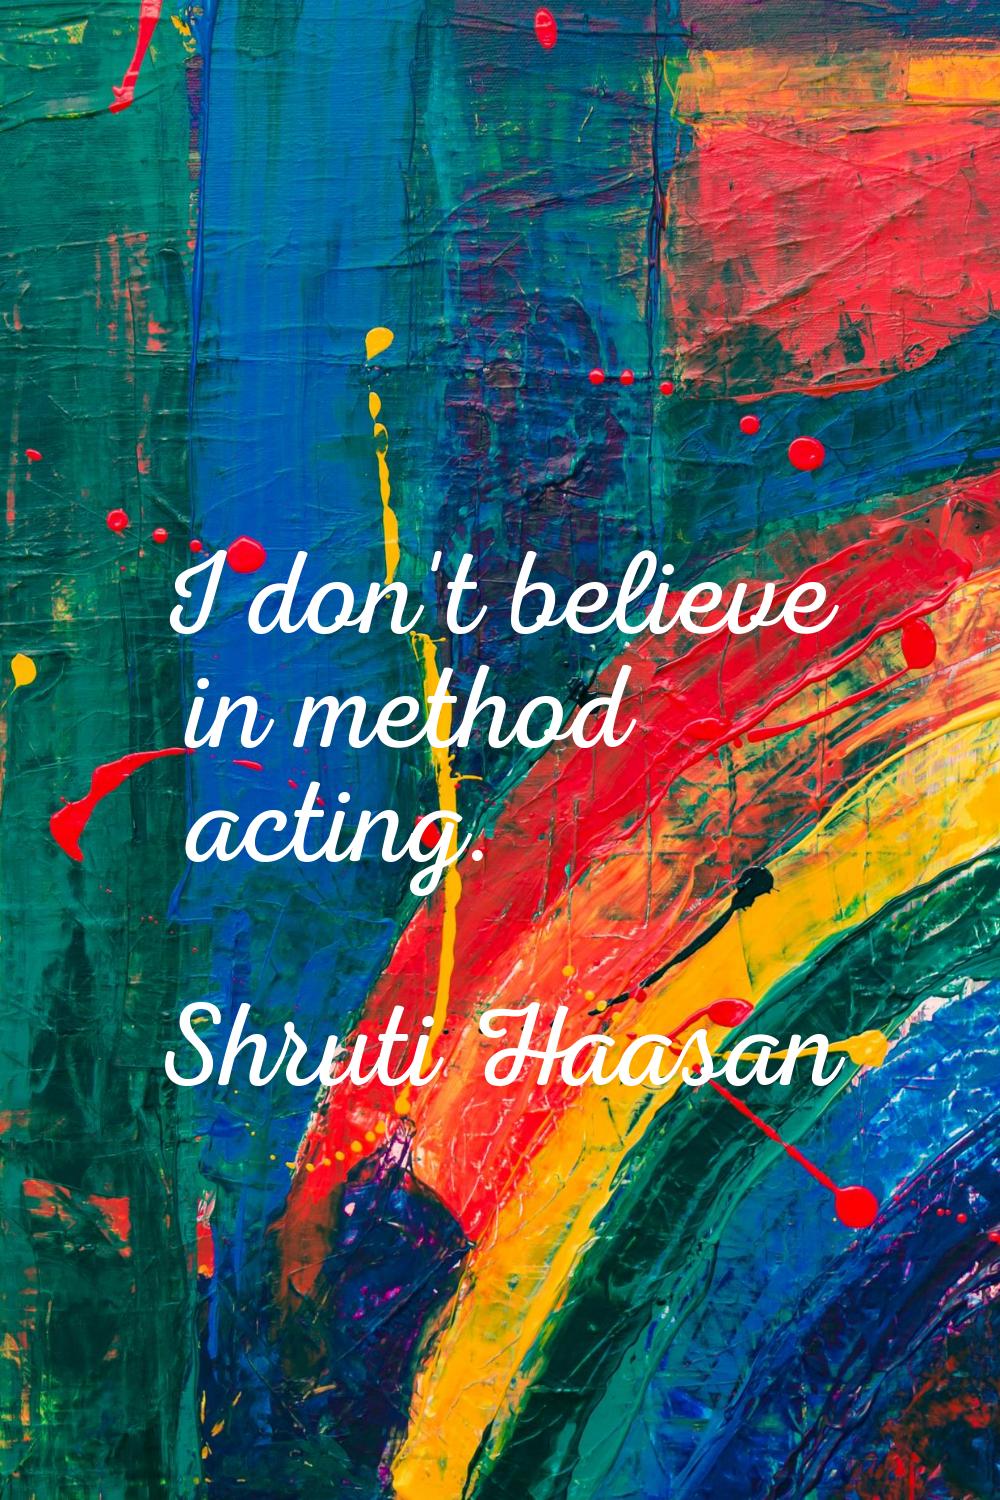 I don't believe in method acting.